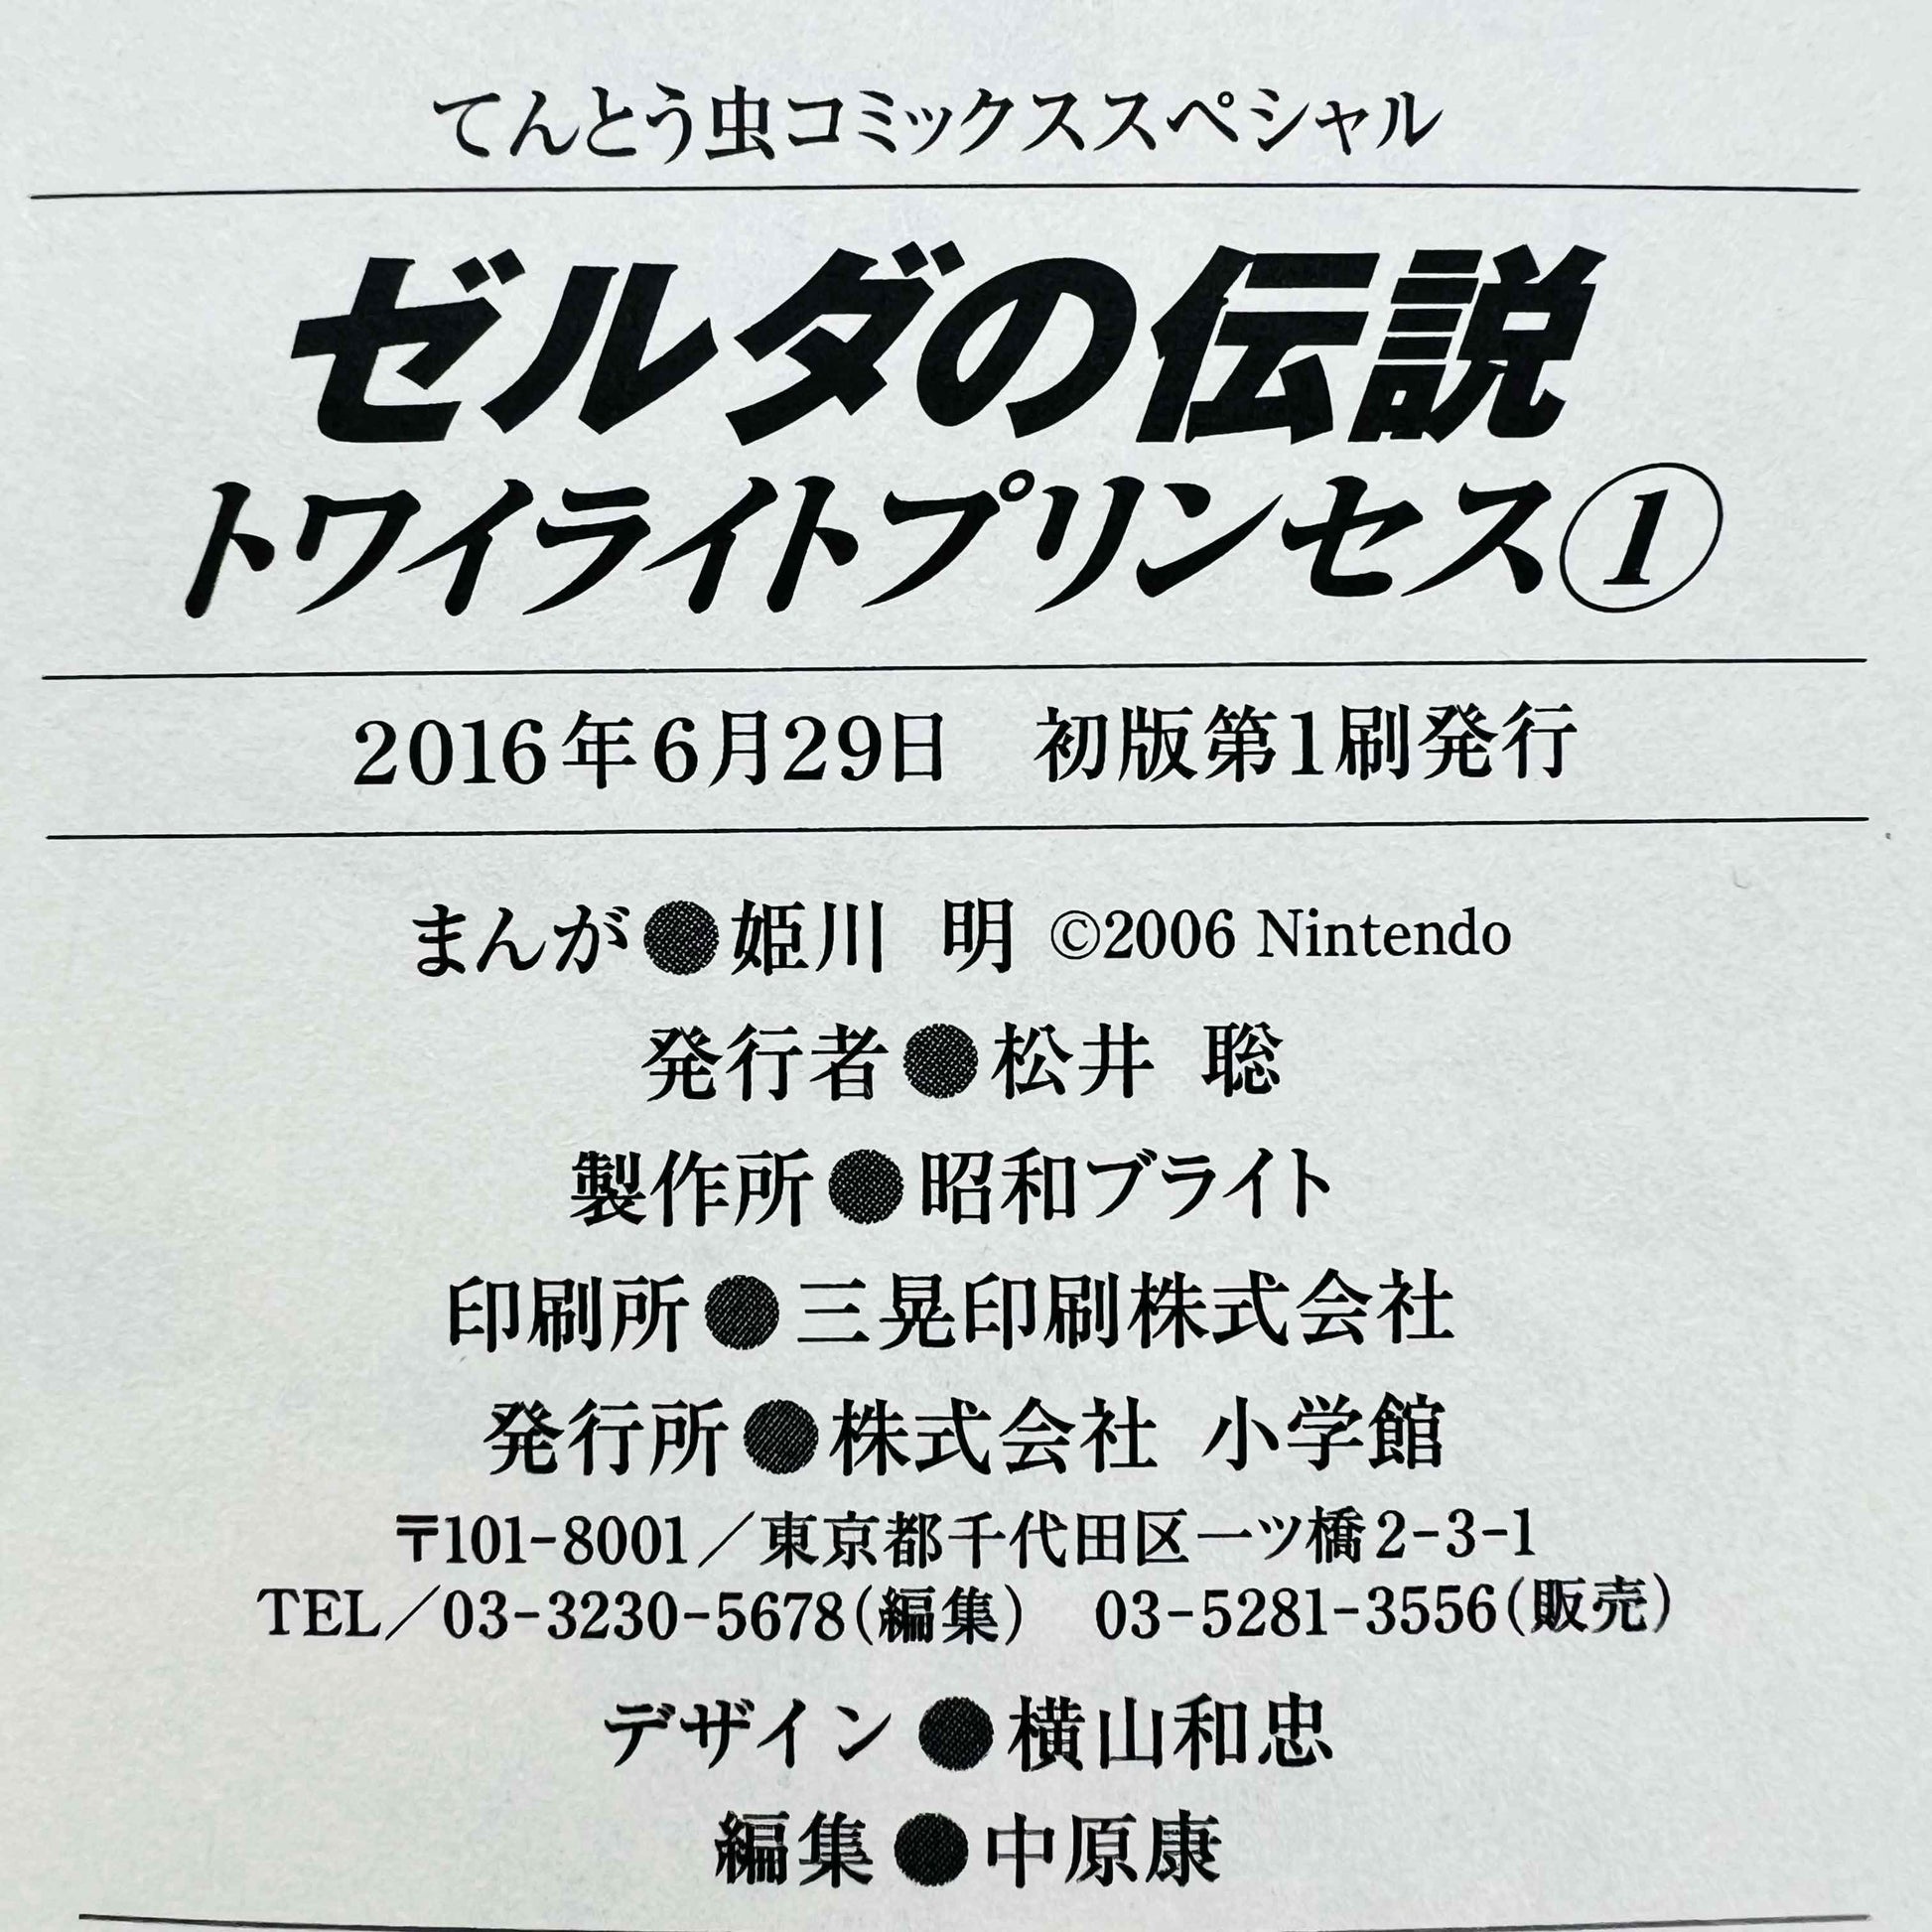 Zelda Twilight Princess - Volume 01 /w Obi - 1stPrint.net - 1st First Print Edition Manga Store - M-ZELDATP-01-002